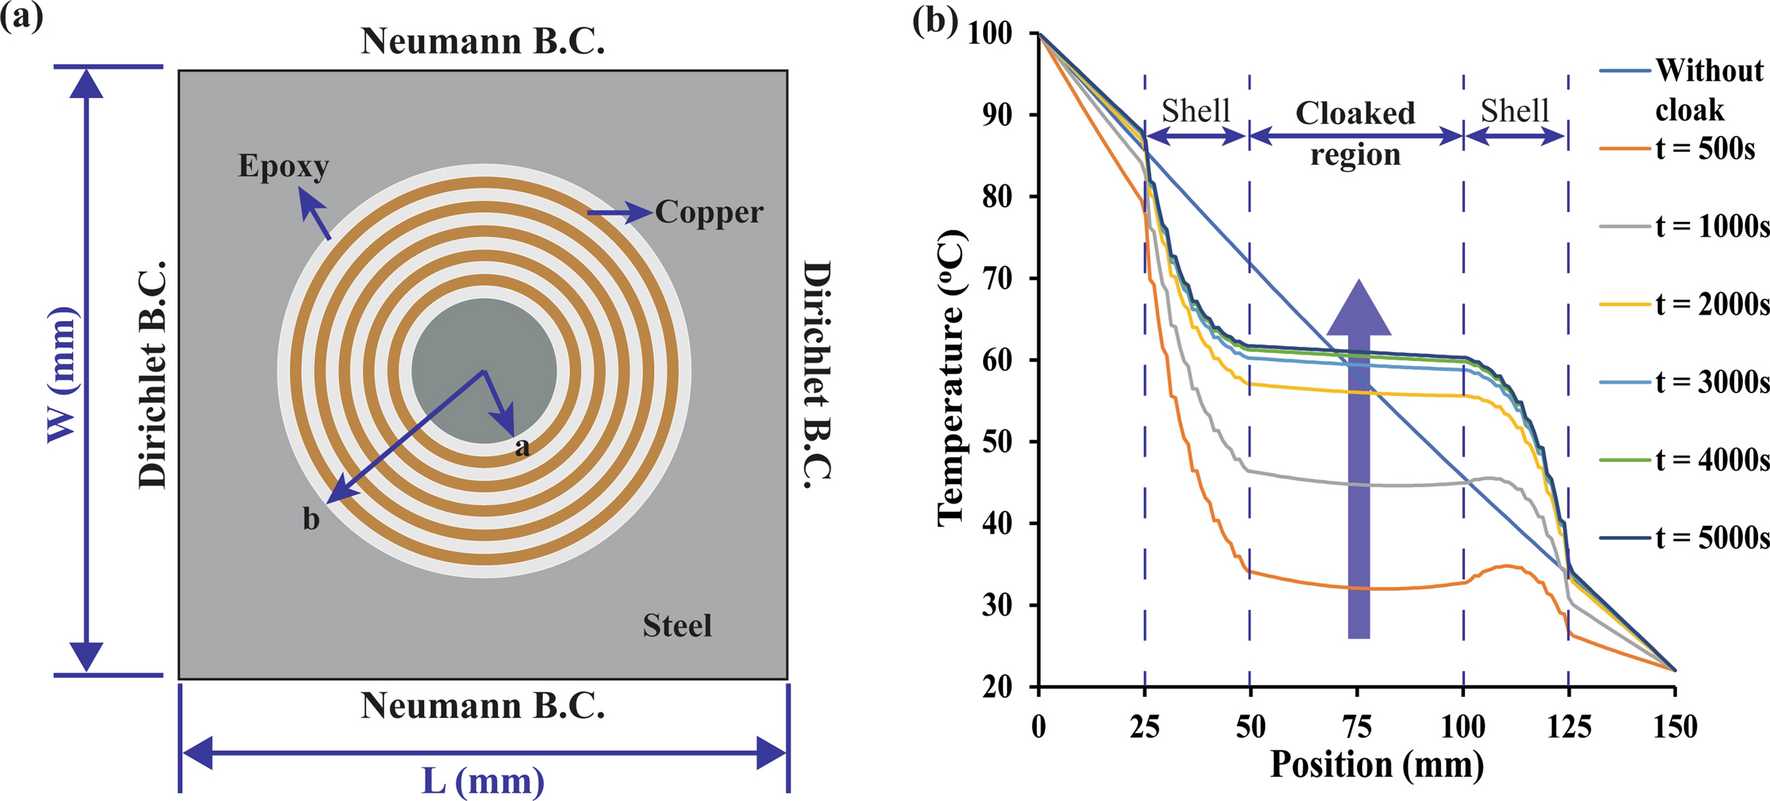 Principle of passive ultra‐conductive thermal metamaterials. a) The